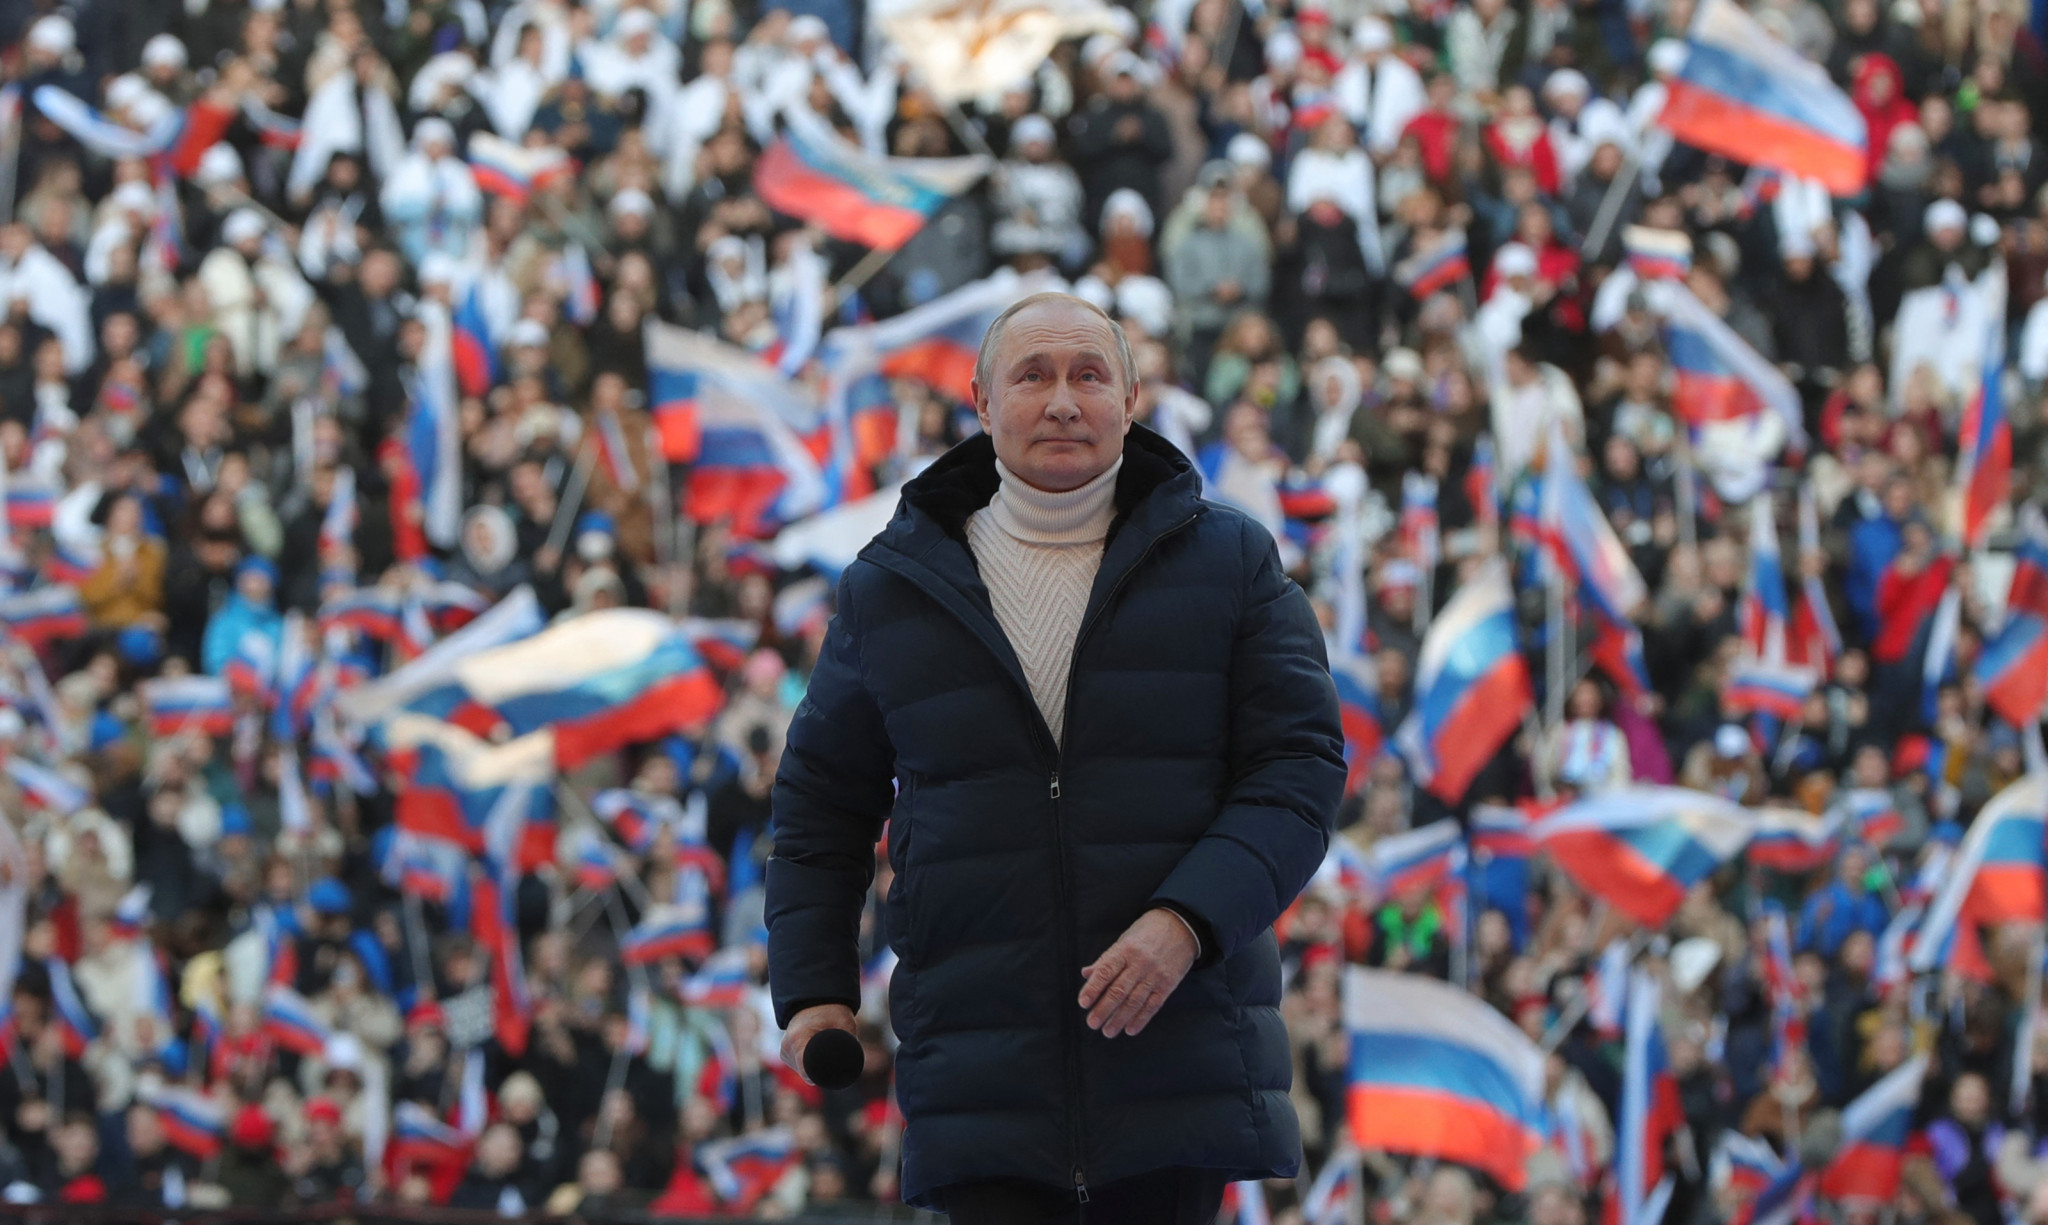 Russian President Vladimir Putin held a 